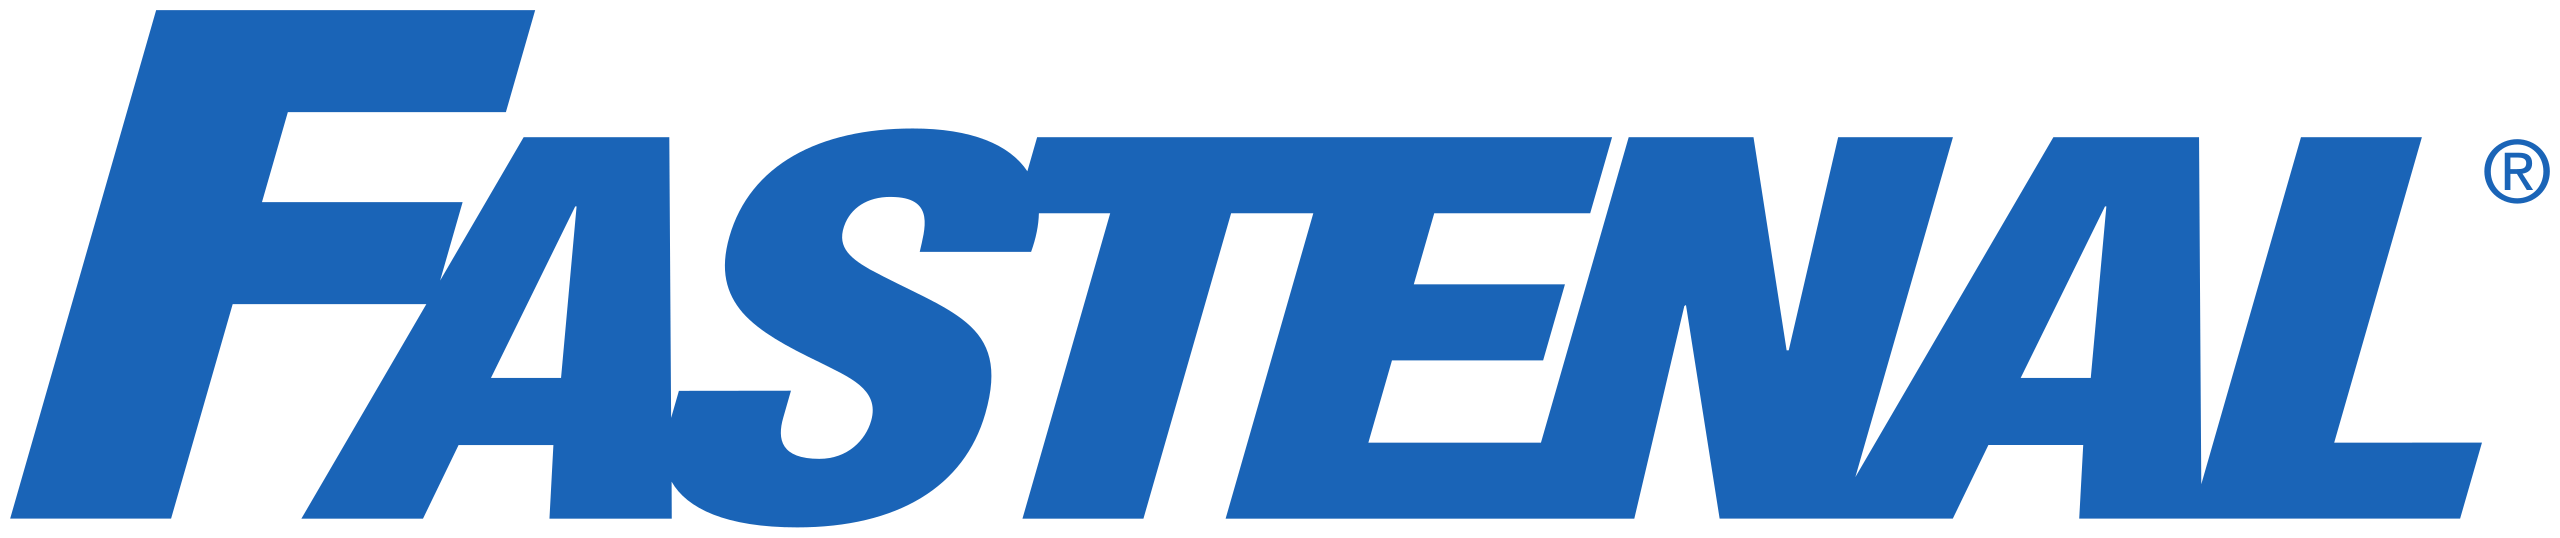 File:Fastenal logo.svg - Wikimedia Commons